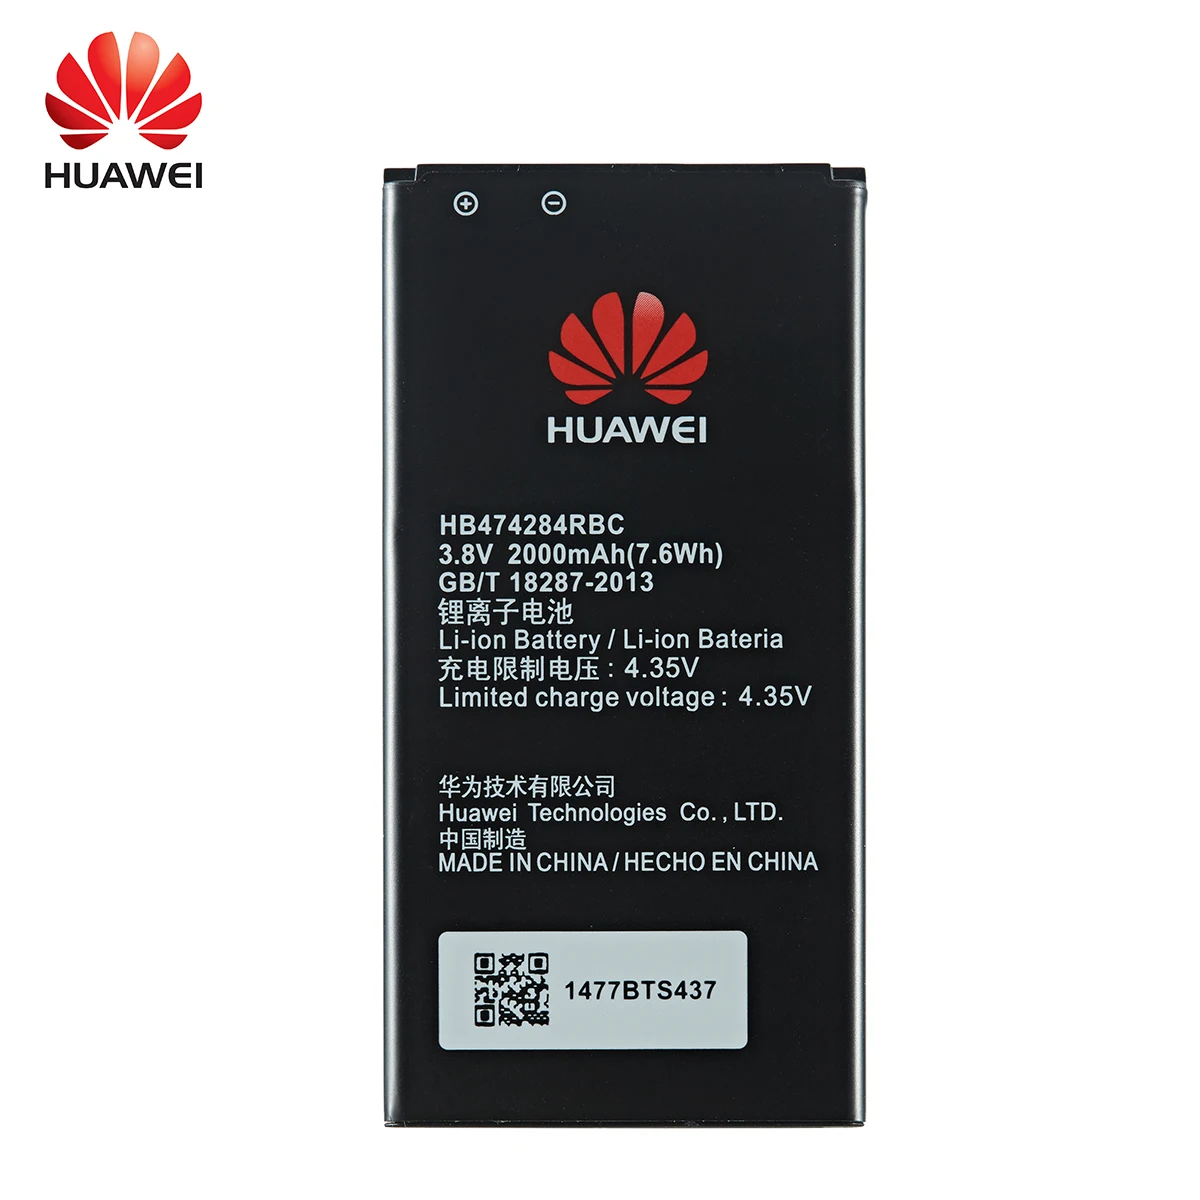 100% Orginal Huawei HB474284RBC 2000mAh Battery For HUAWEI honor 3C lite C8816 Y550 Y560 Y625 Y635 G521 G620 y5  Mobile Phone 5000mah battery phone